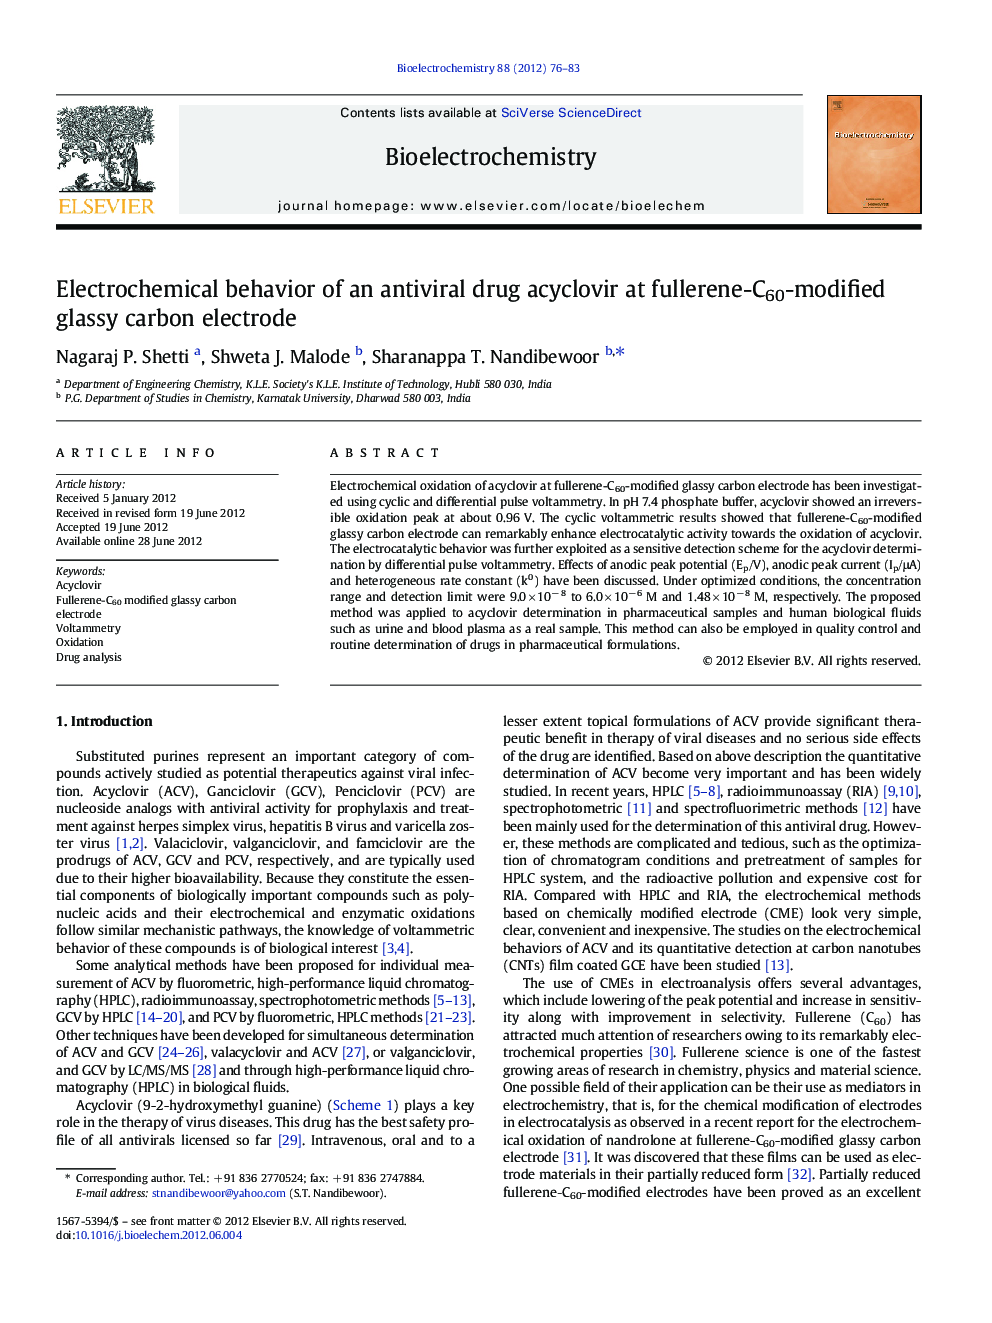 Electrochemical behavior of an antiviral drug acyclovir at fullerene-C60-modified glassy carbon electrode